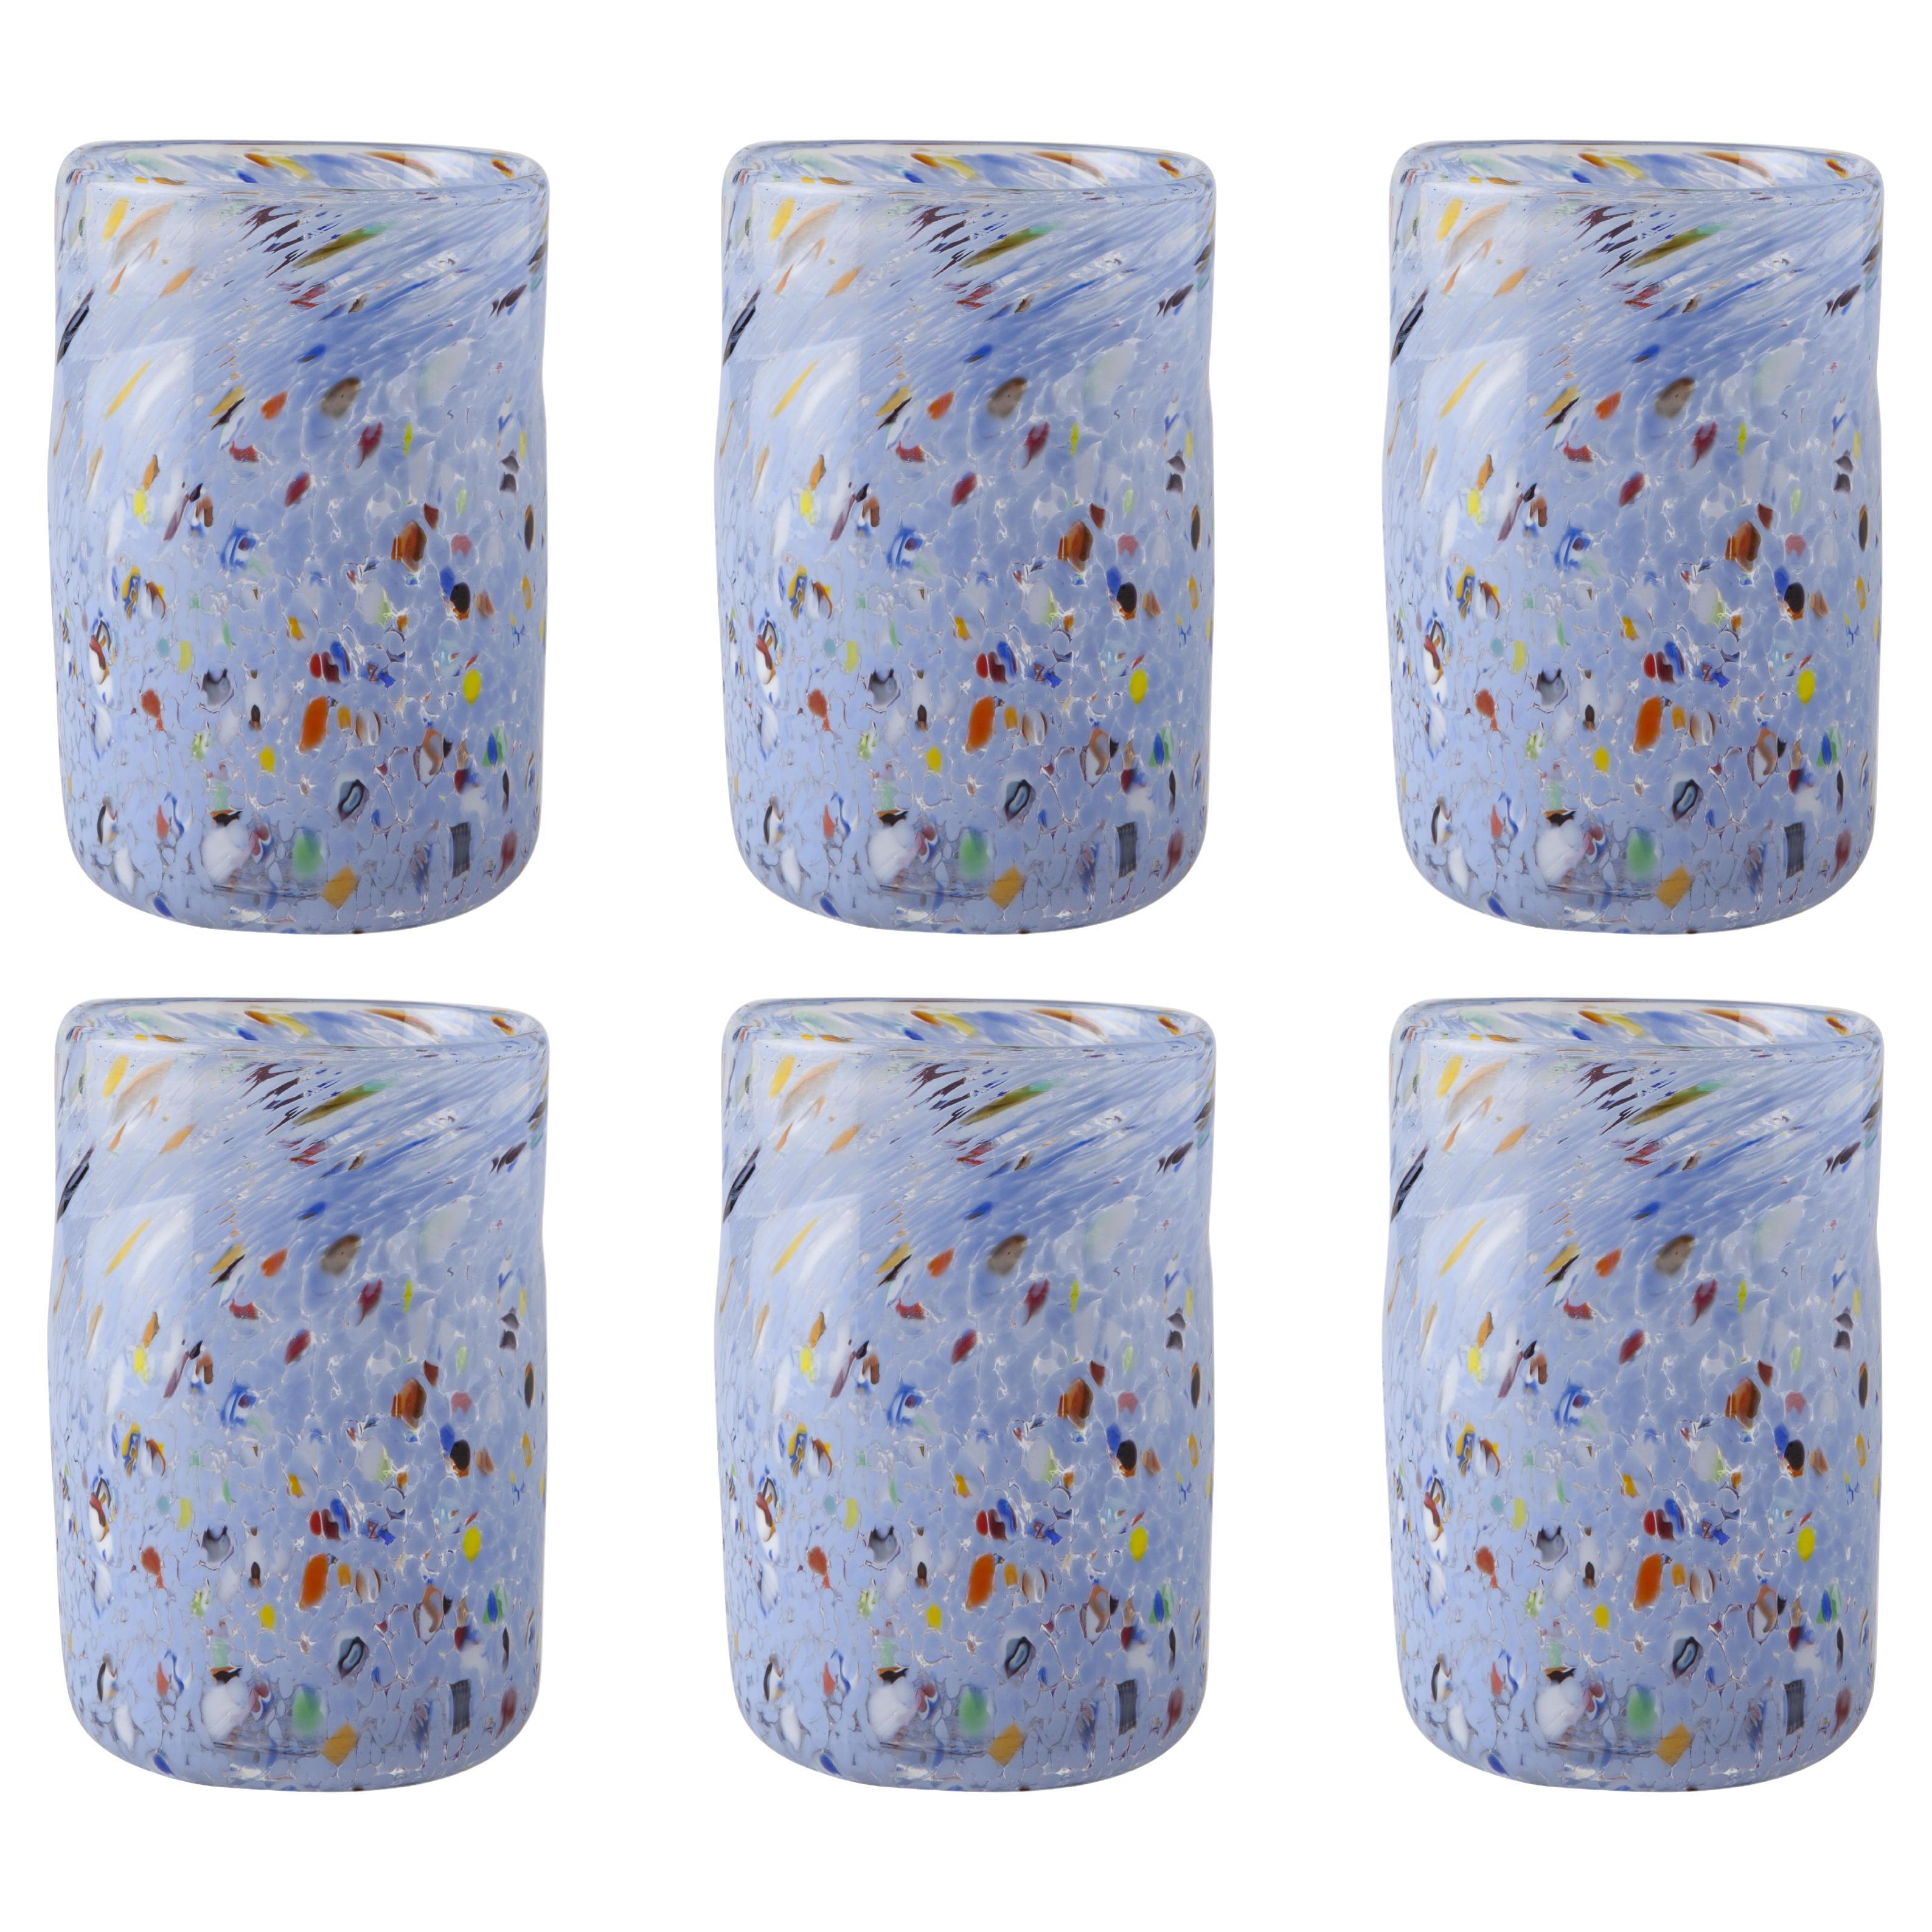 Set of 6 Light Blue, Periwinkle Handmade Unique Goto Murano Drinking Glasses